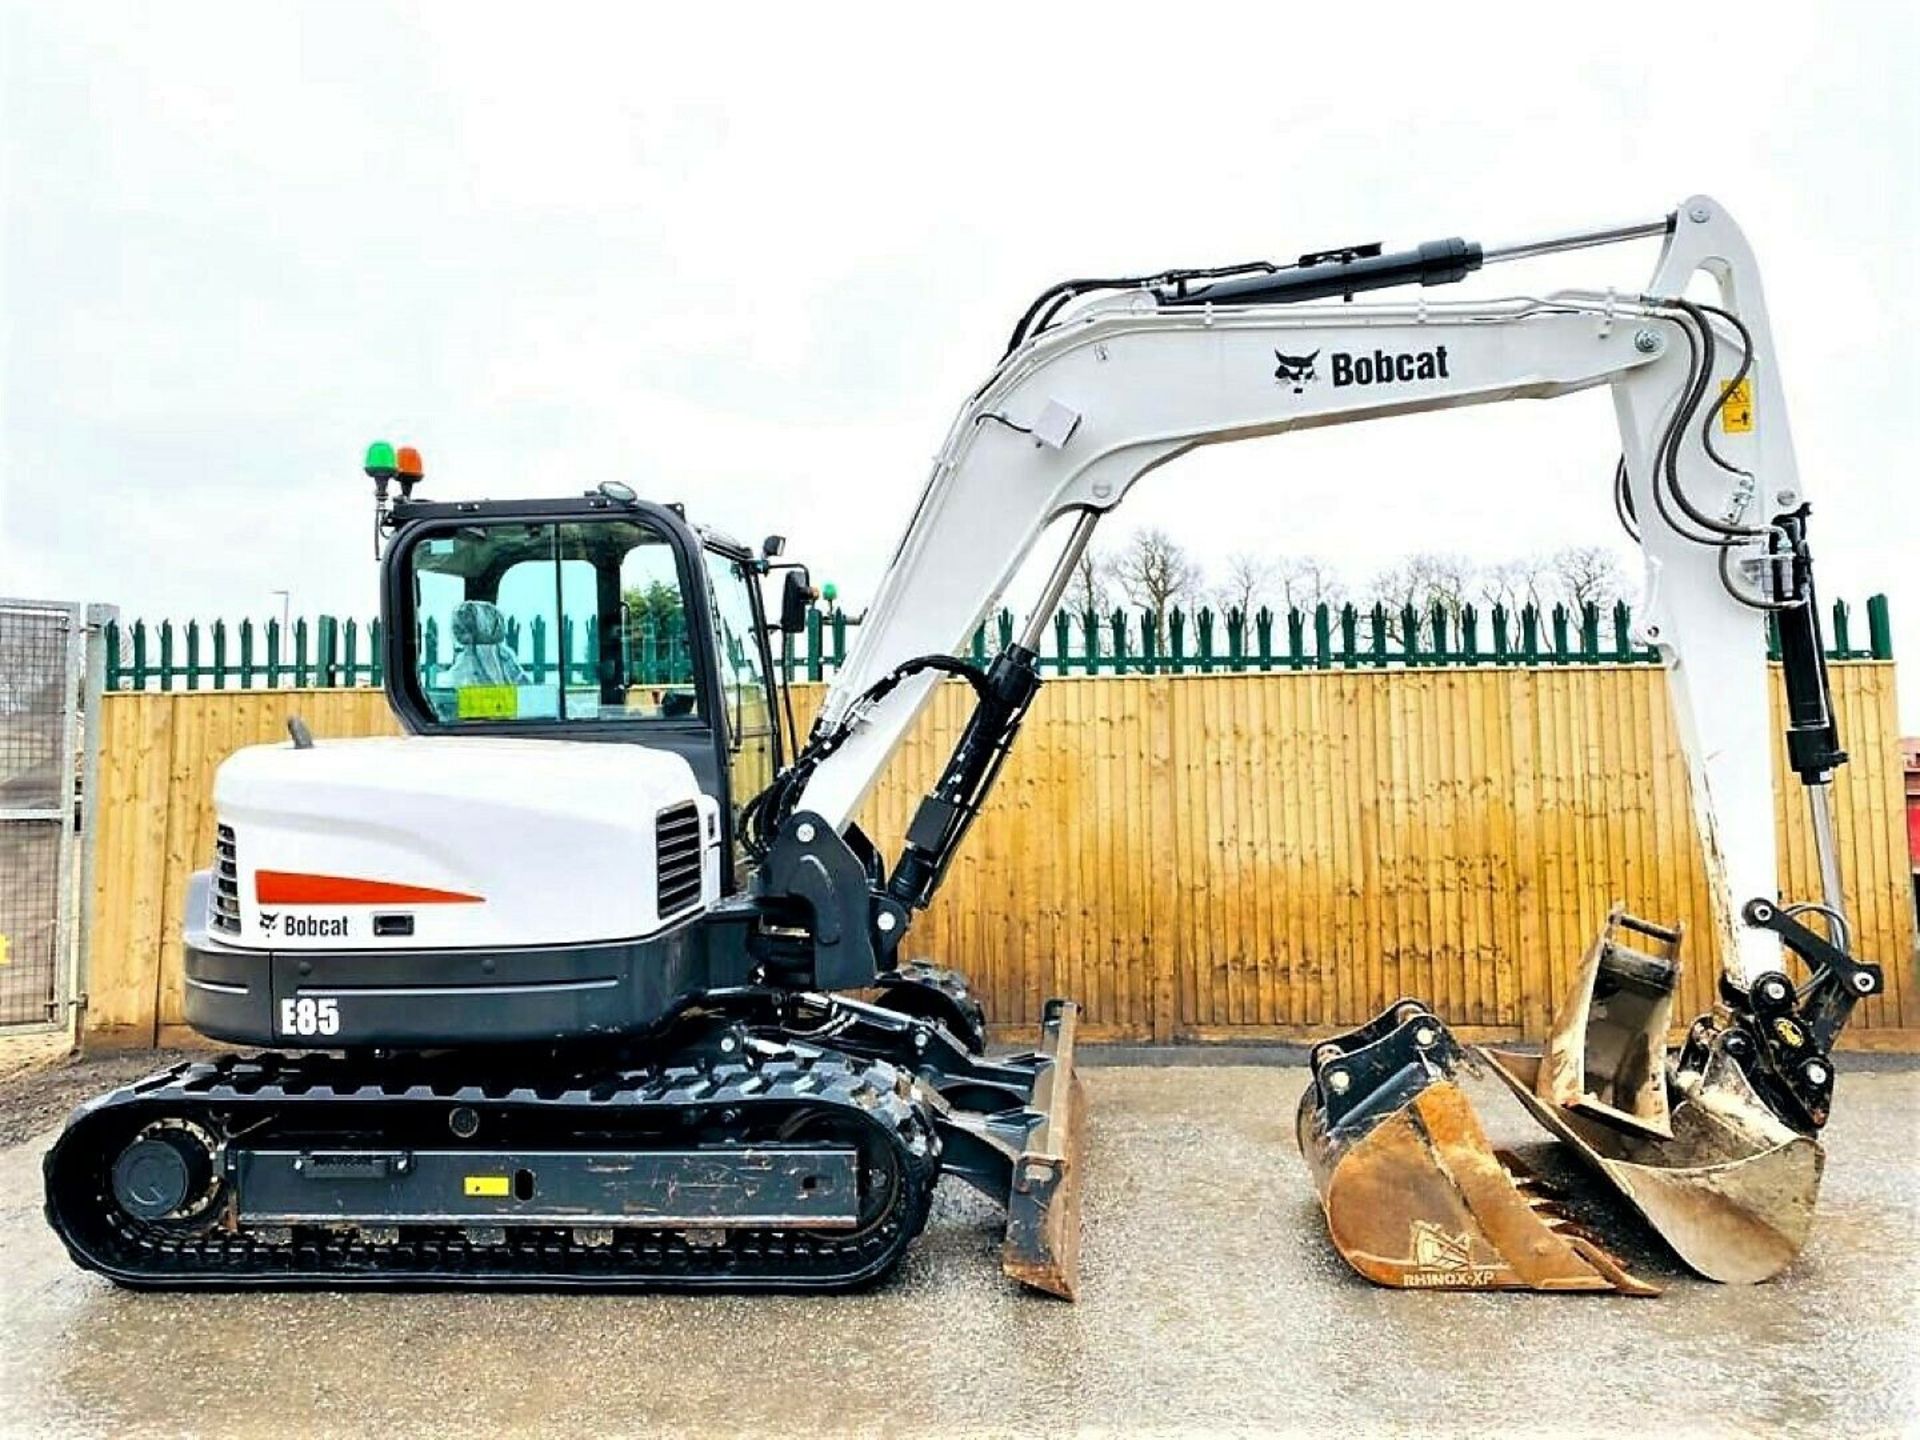 Bobcat E85 Excavator - Image 2 of 7